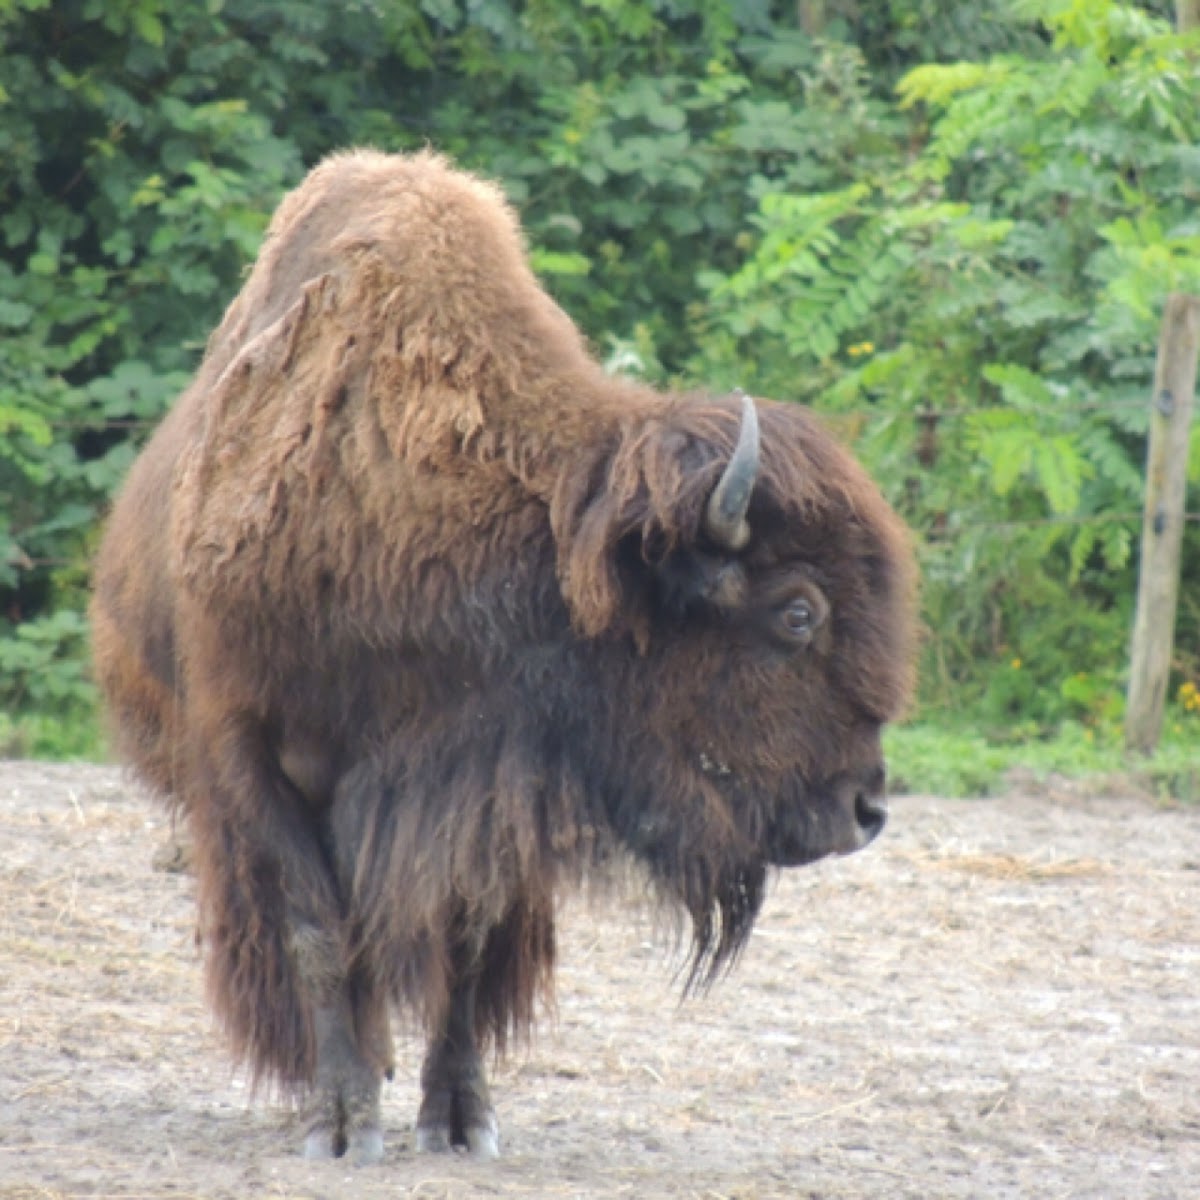 Bison/buffalow